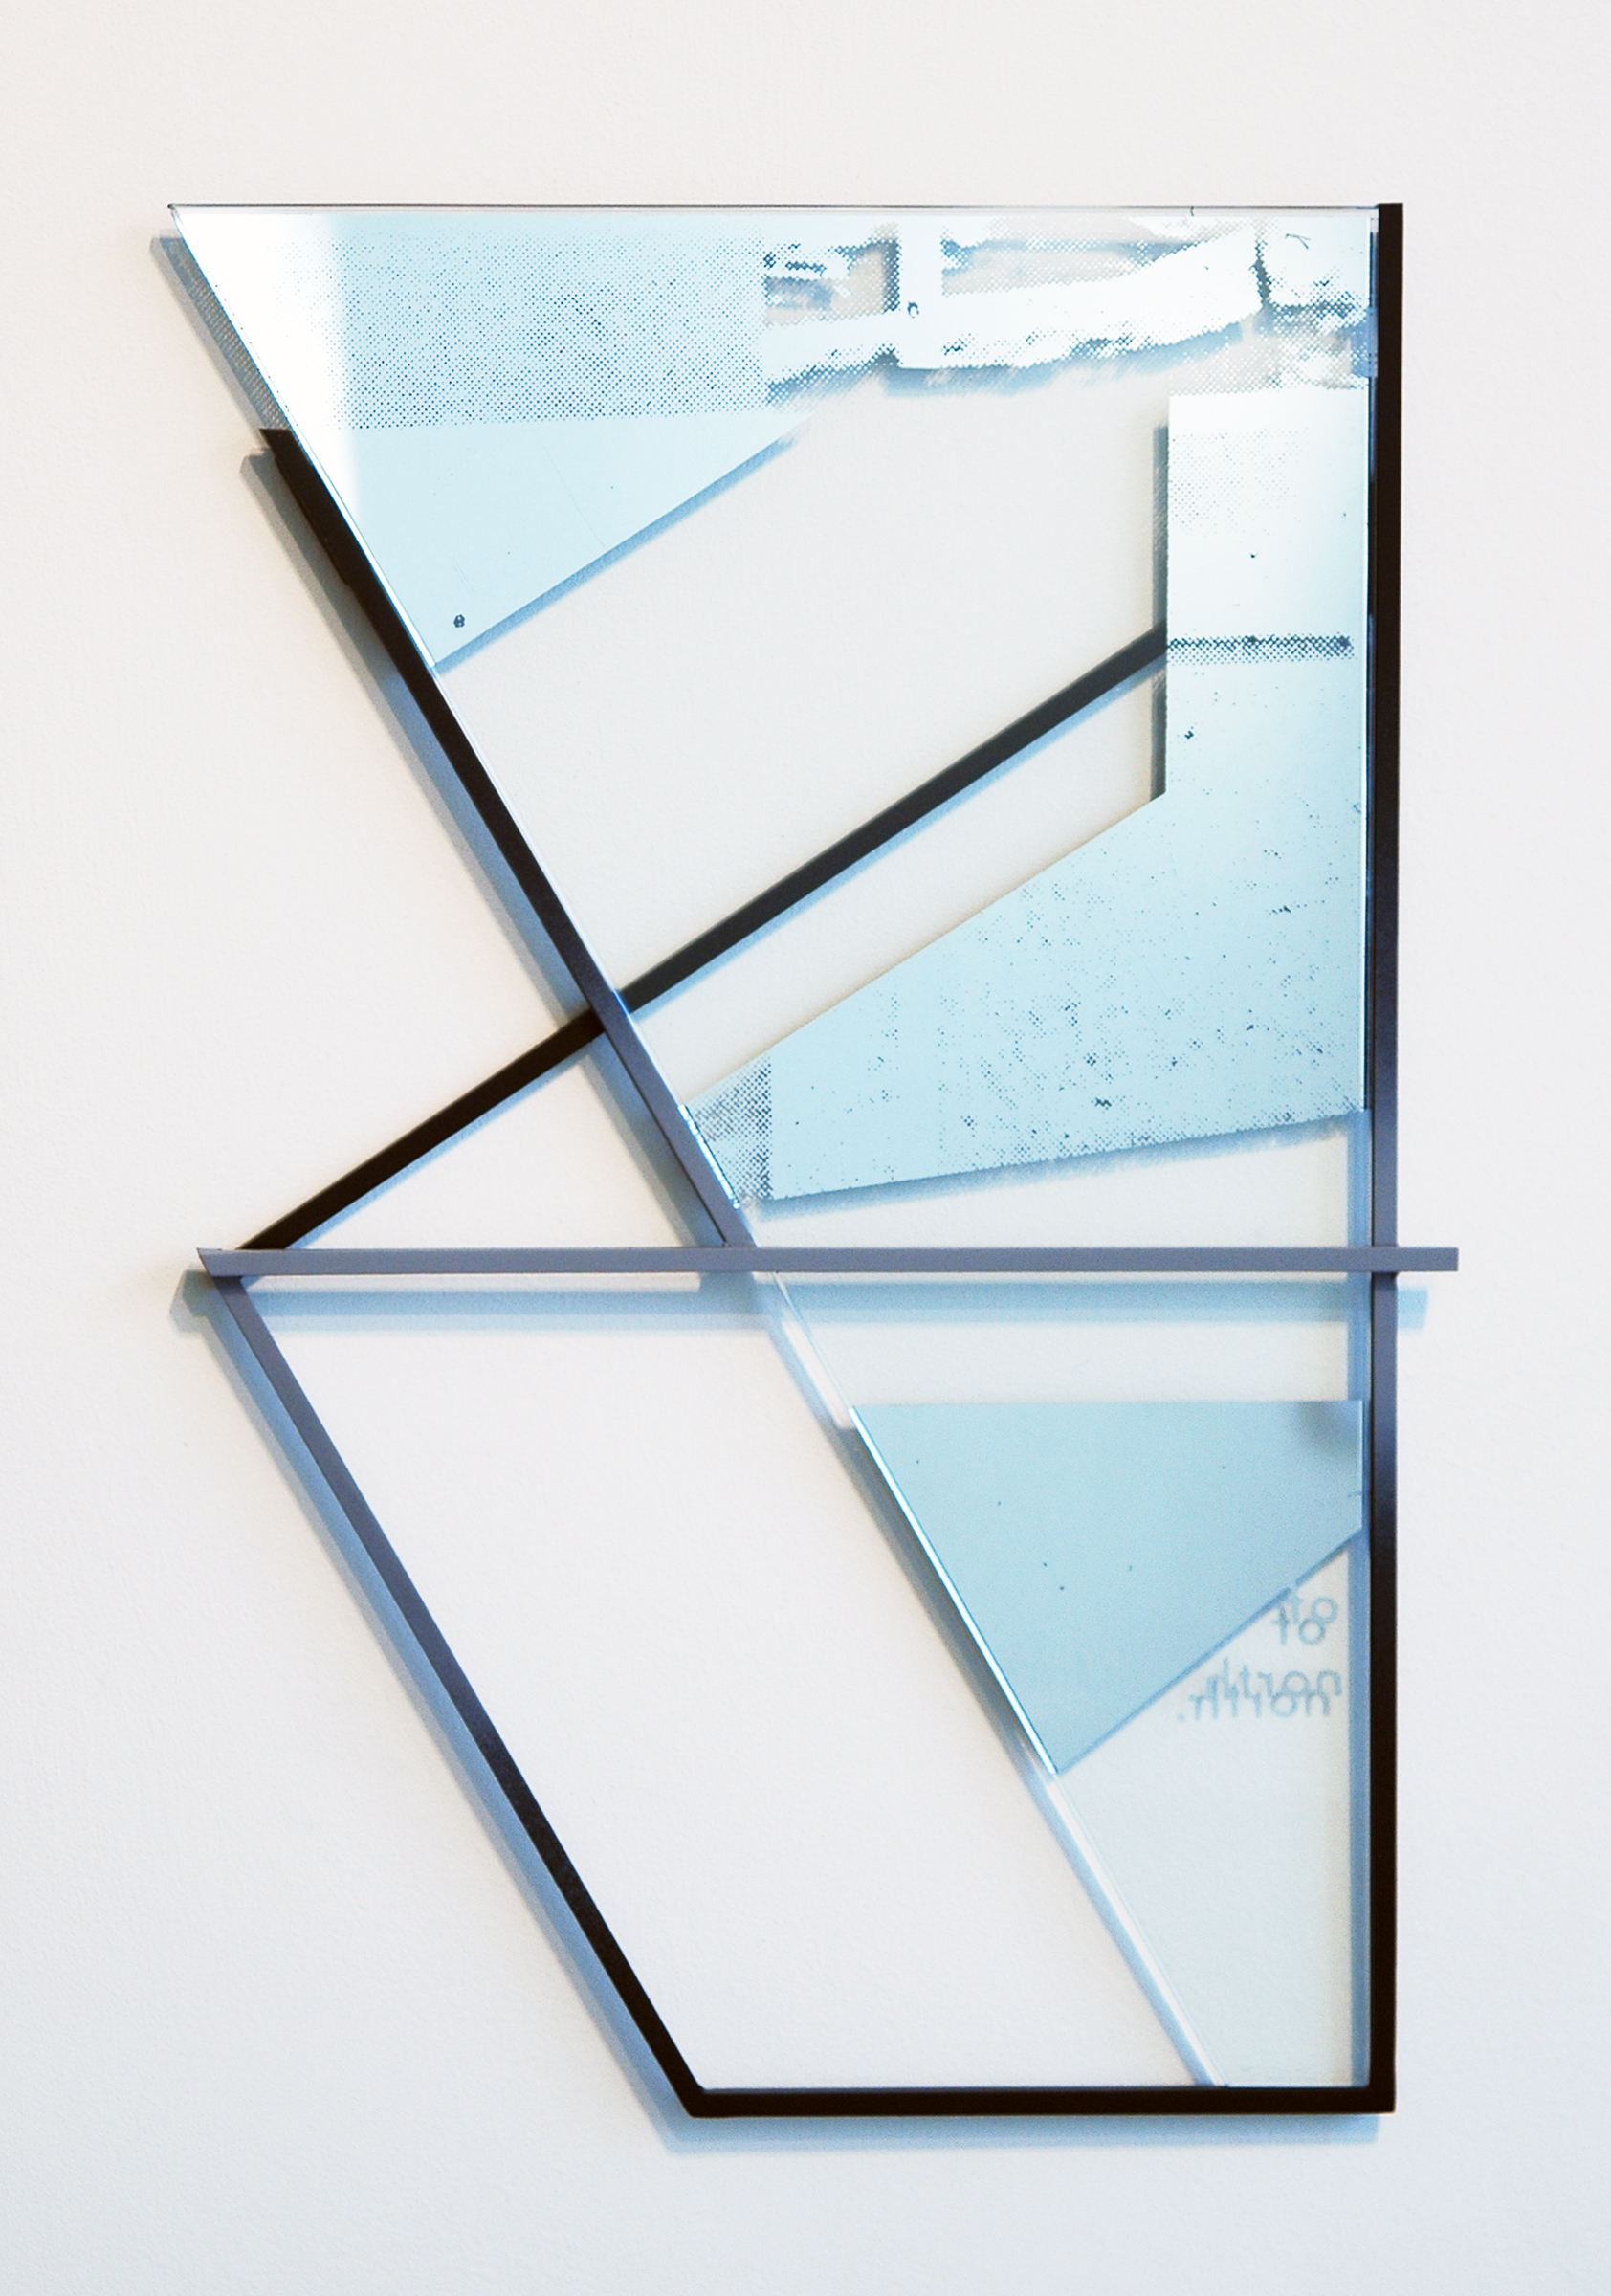   JONATHAN RUNCIO   Untitled , mirror, screen-print, steel and paint, 19" x 12.5", 2013 